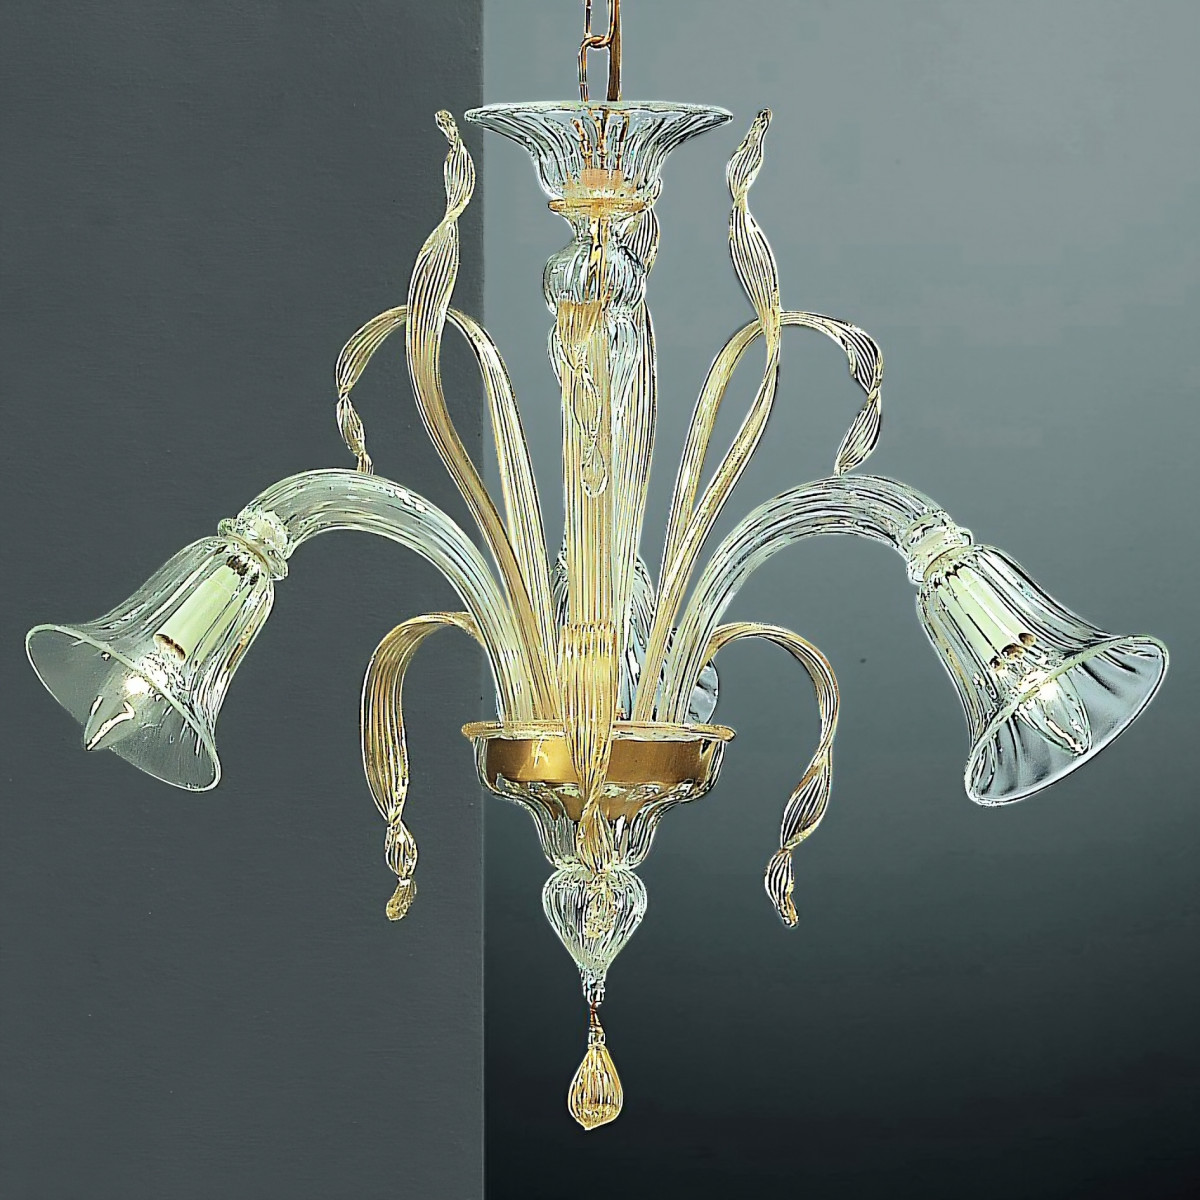 Rialto 3 lights Murano chandelier - transparent gold color